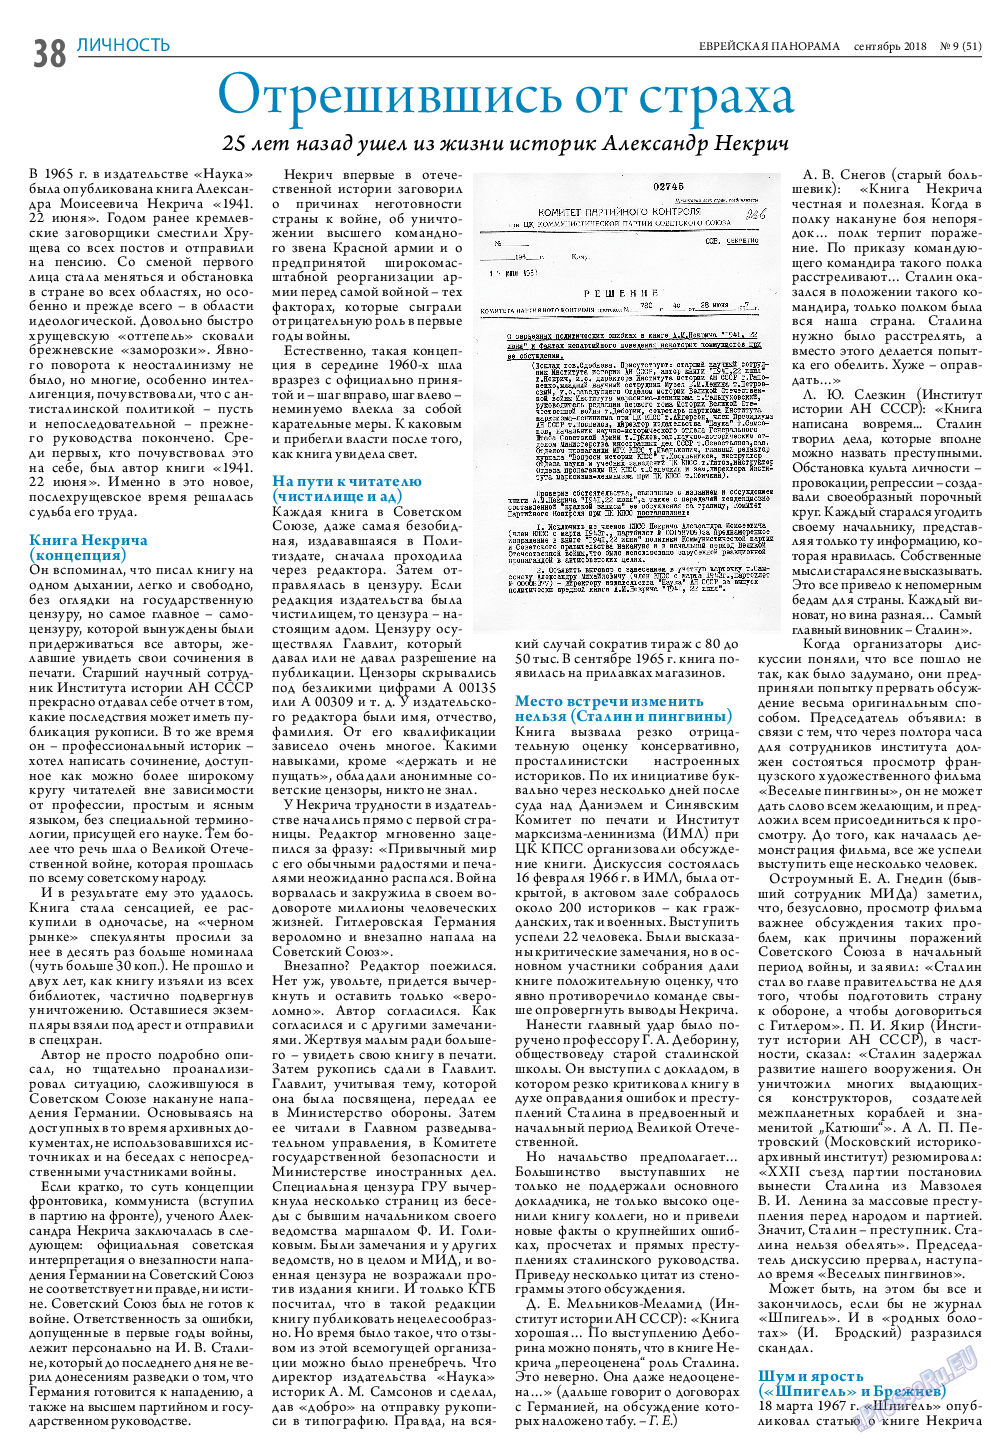 Еврейская панорама, газета. 2018 №9 стр.38